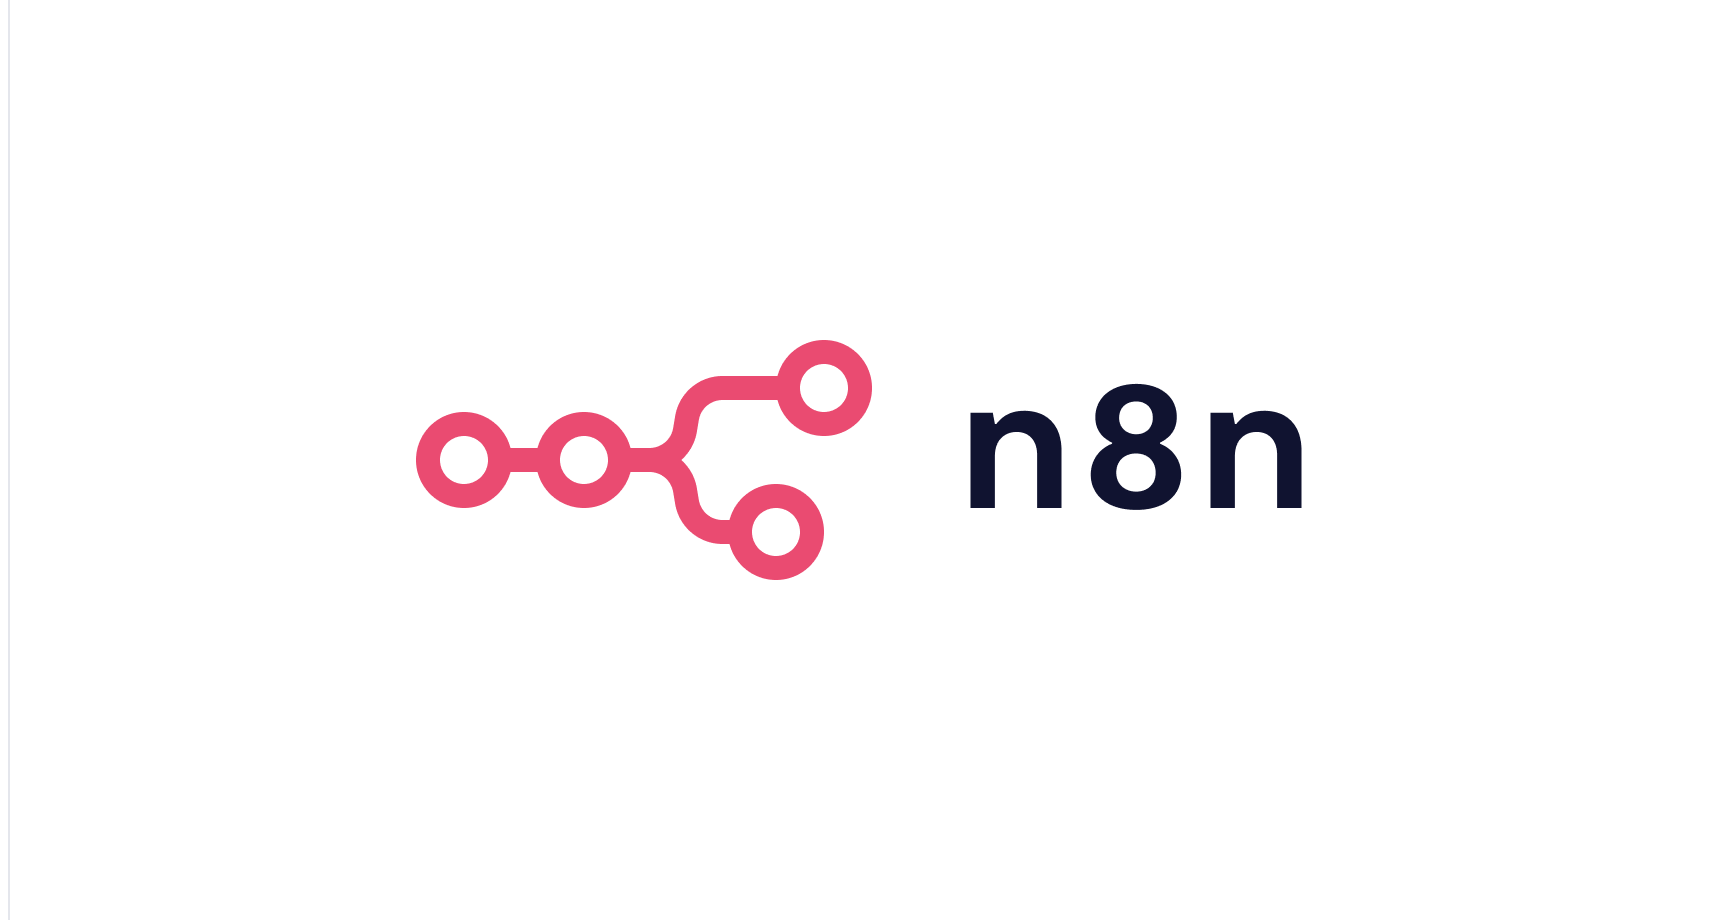 n8n logo